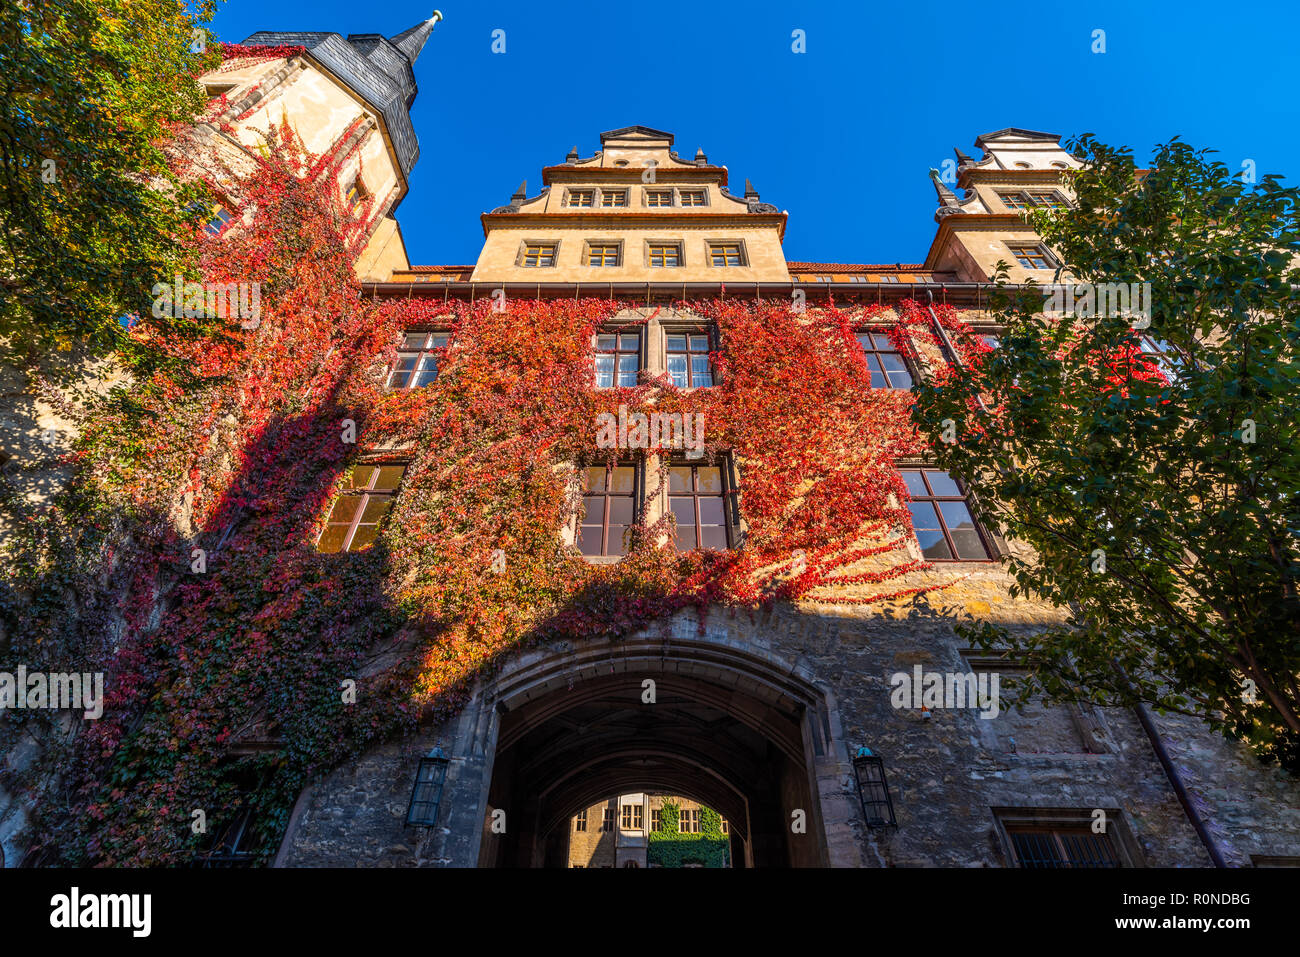 Schloss Merseburg, Froschperspektive, Herbstlaub, Oktober, Sachsen-Anhalt, Germany Stock Photo